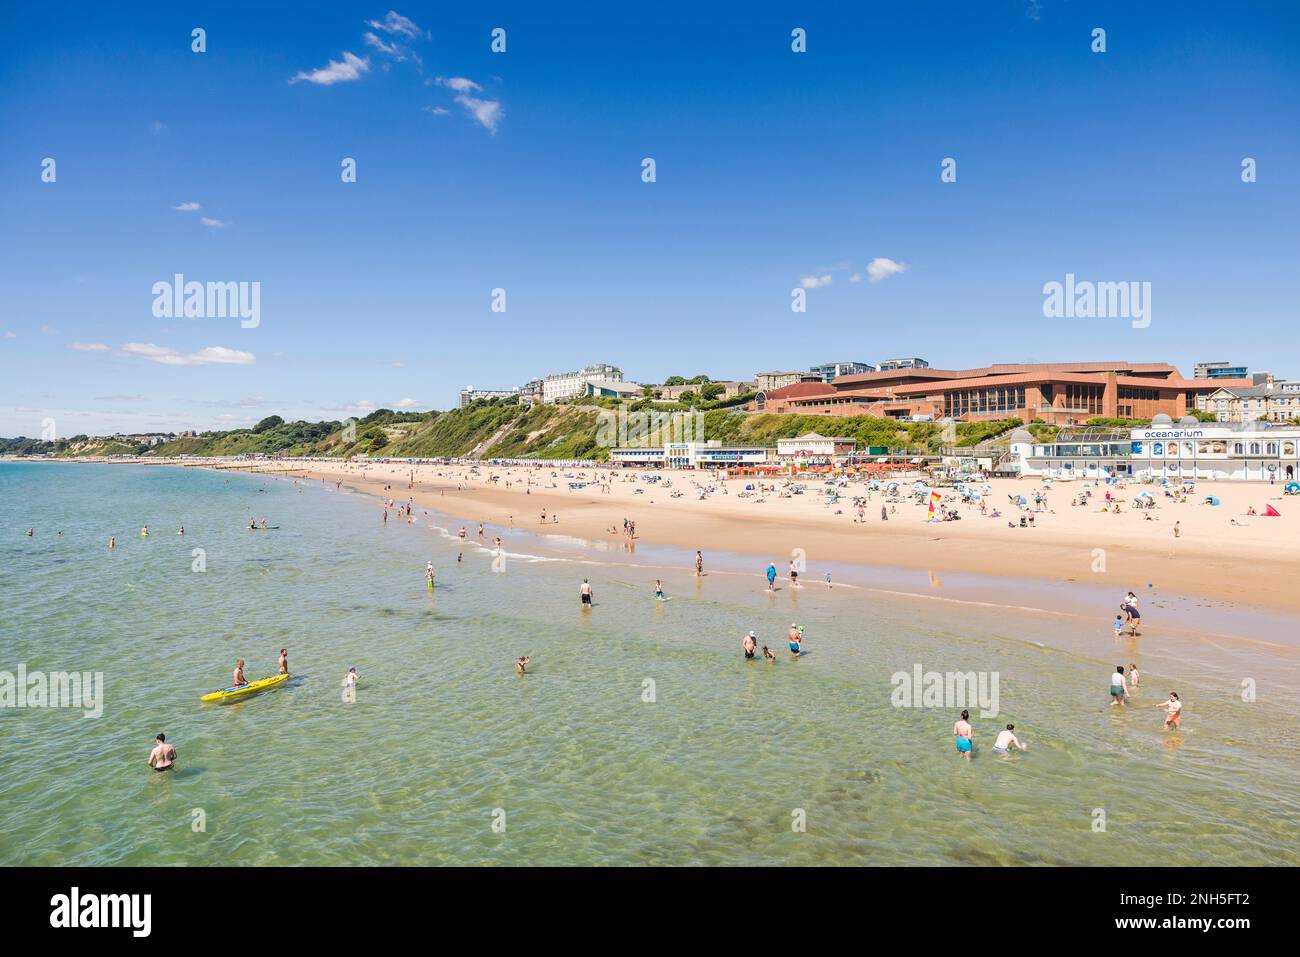 BOURNEMOUTH, UK - July 08, 2022. People enjoying summer by the sea on a sandy beach. Bournemouth, Dorset, UK Stock Photo